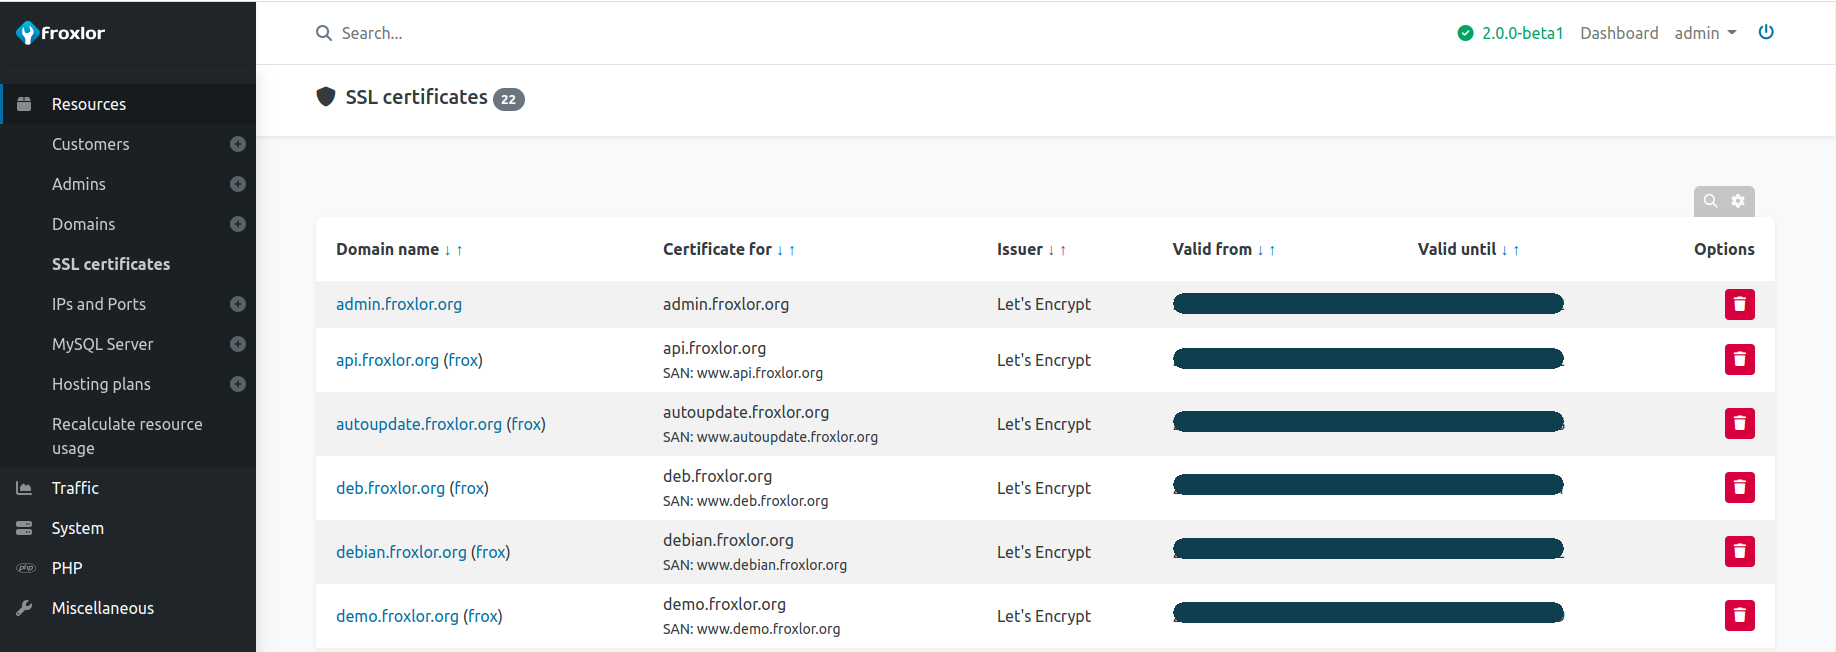 SSL certificates overview